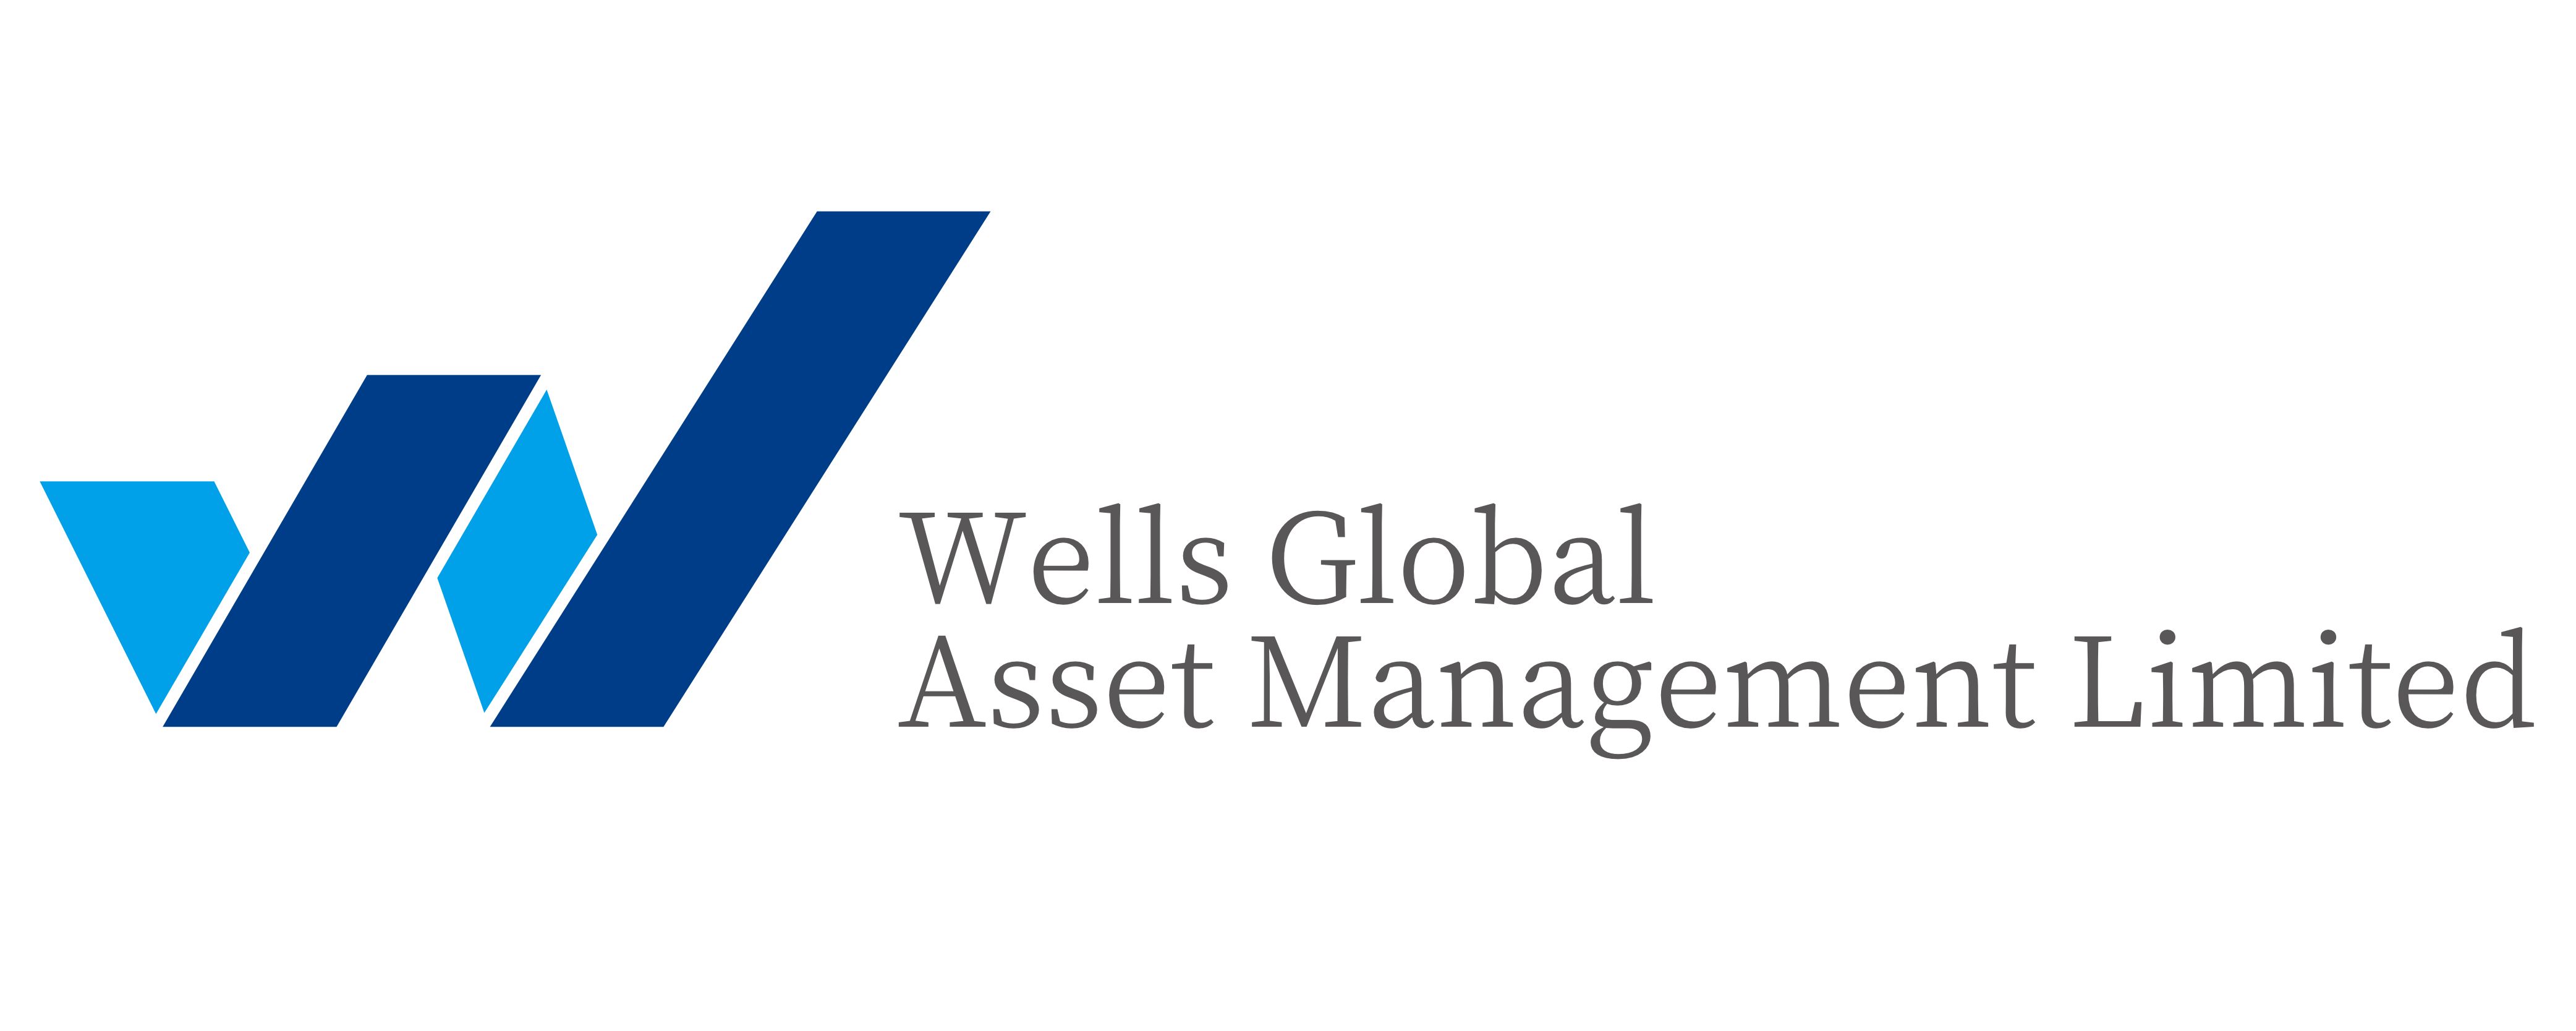 Wells Global Asset Management Limited